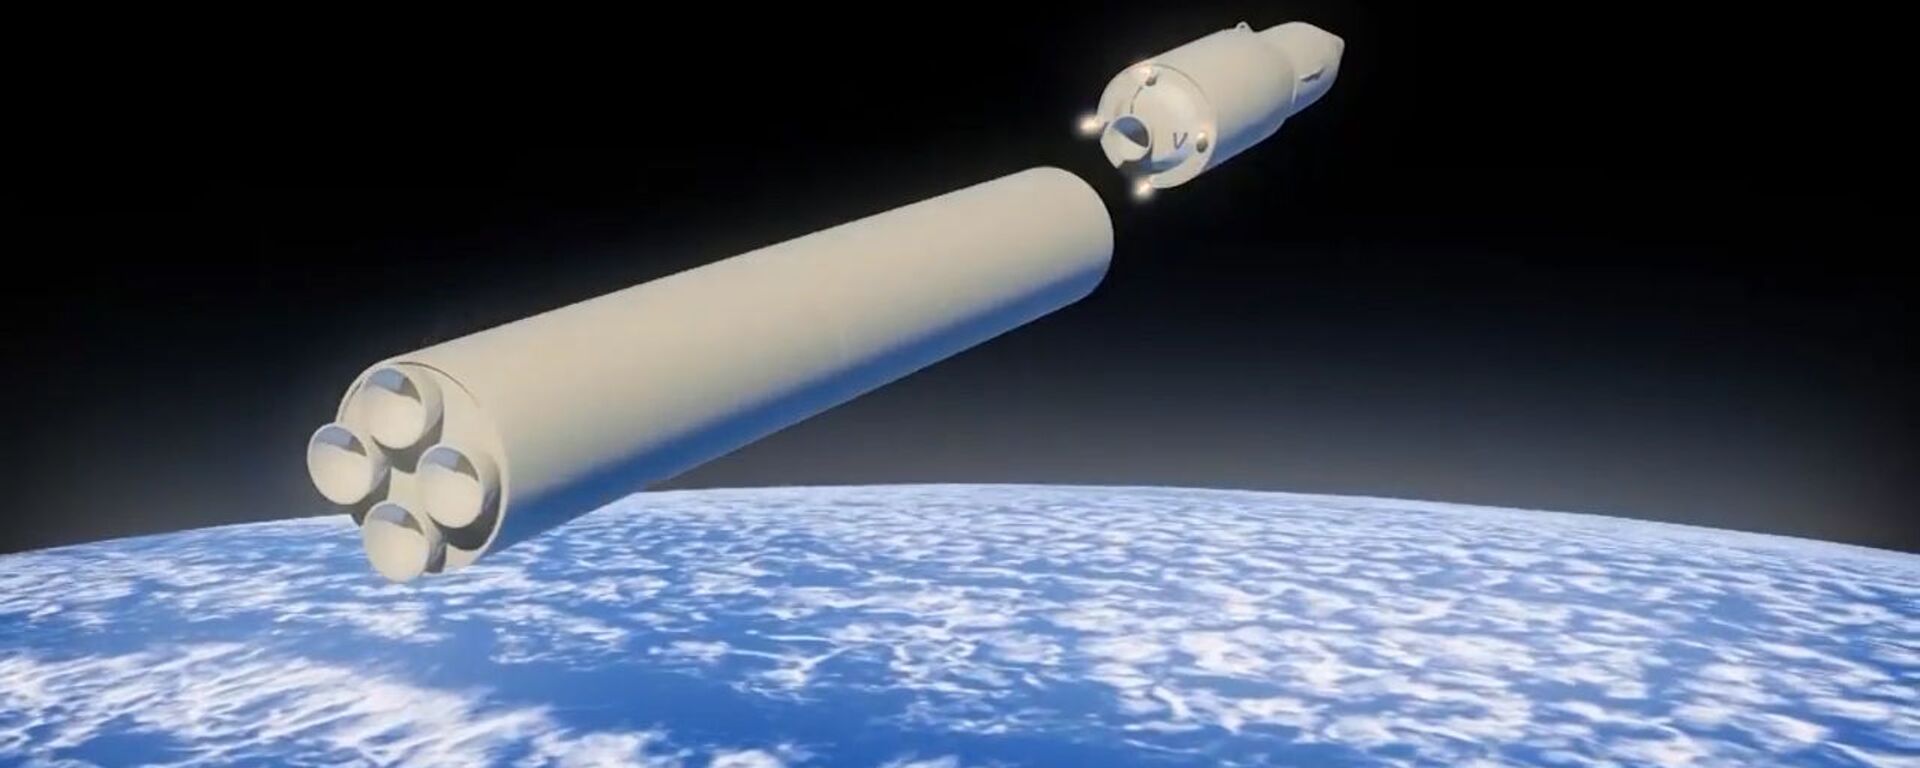 El novedoso misil hipersónico Avangard - Sputnik Mundo, 1920, 24.03.2022